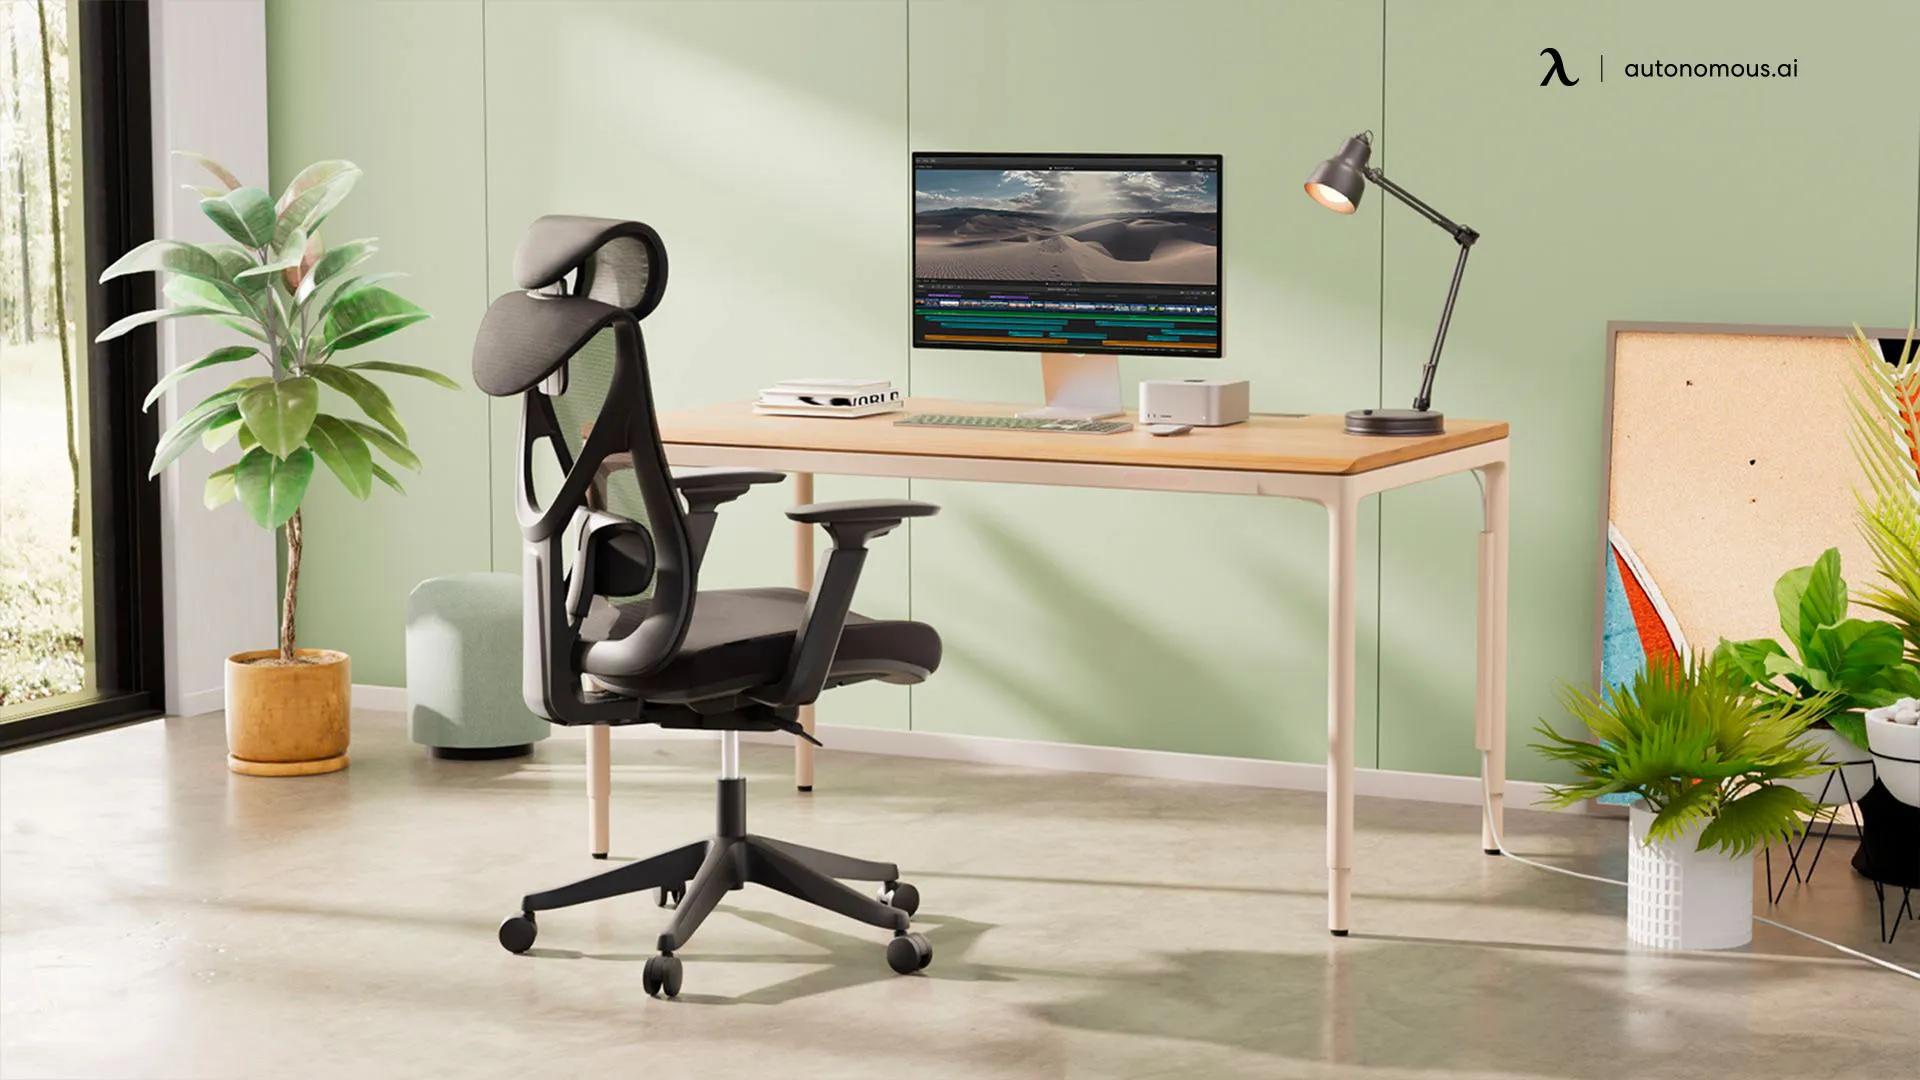 The Supportive Chair - ergonomic desk setup diagram